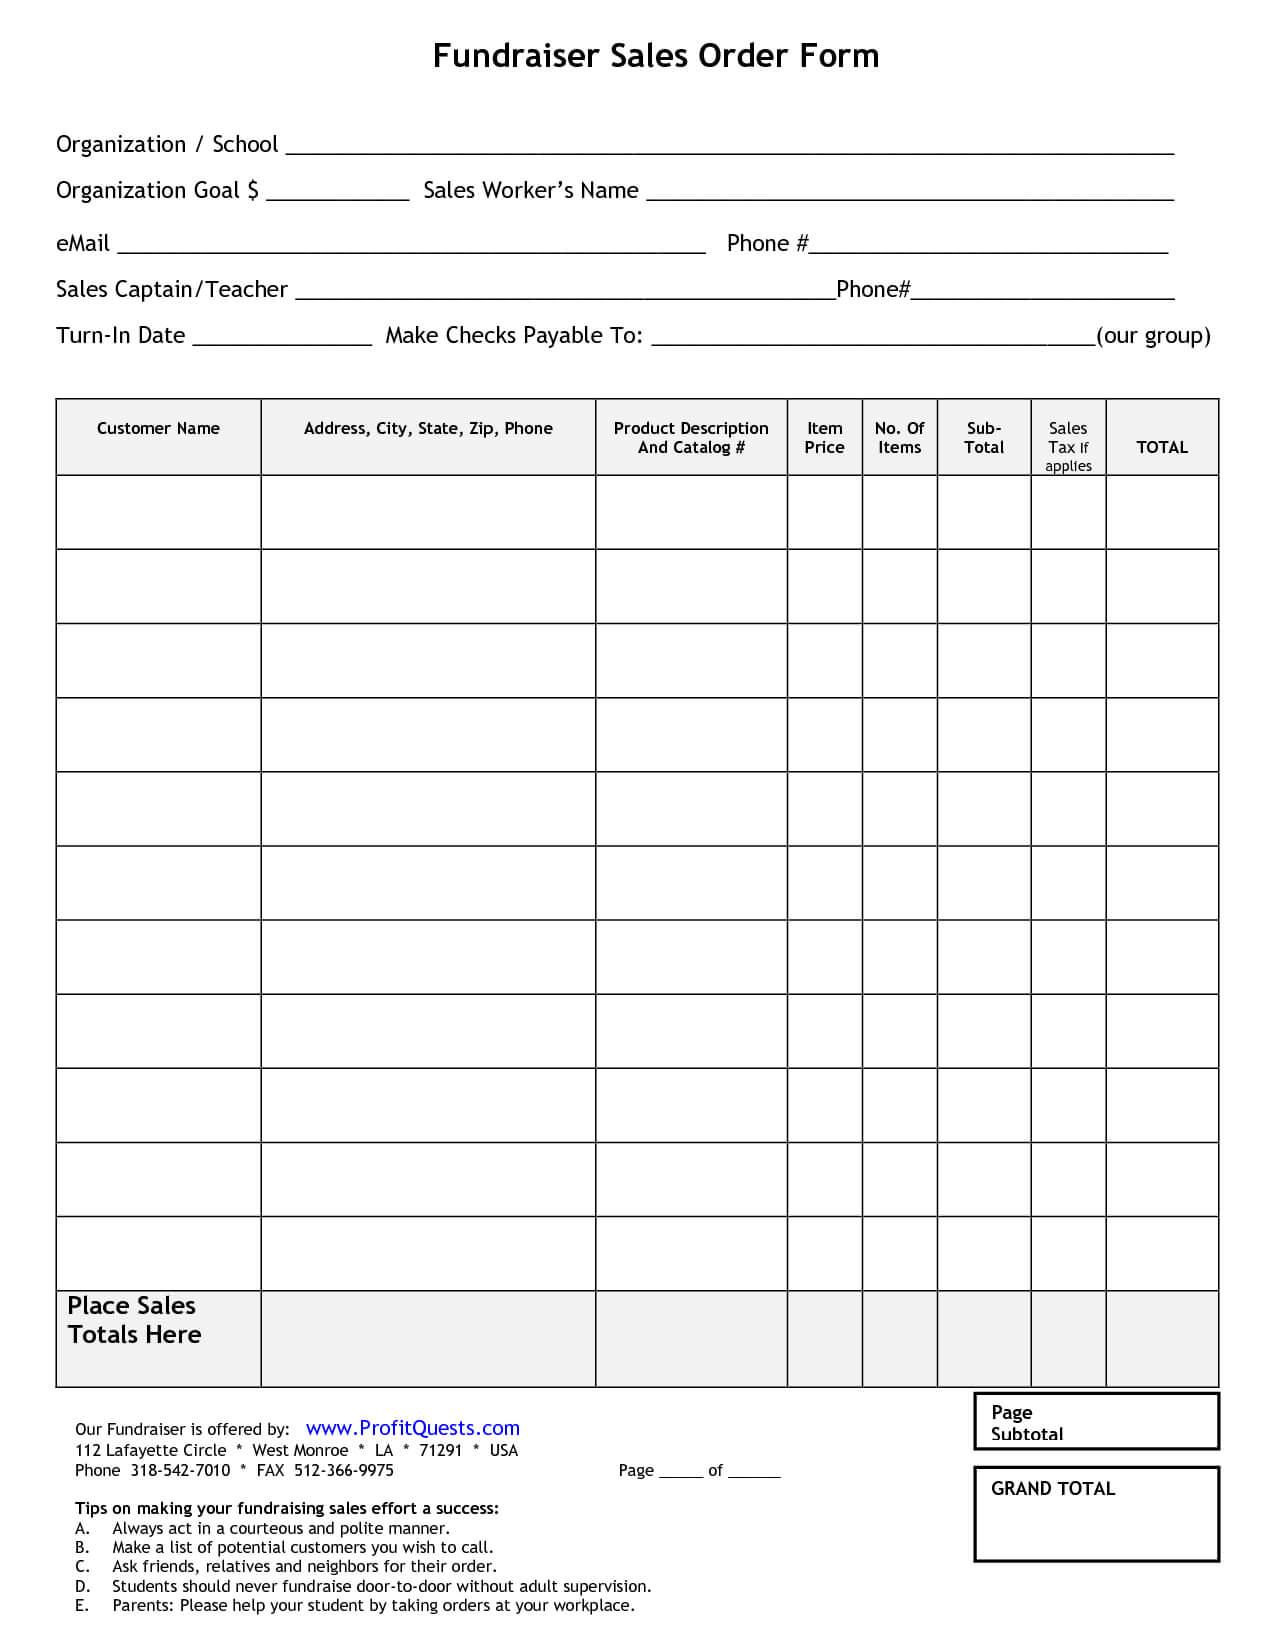 Fundraiser Order Form | Fundraiser Order Form Template Throughout Blank Fundraiser Order Form Template